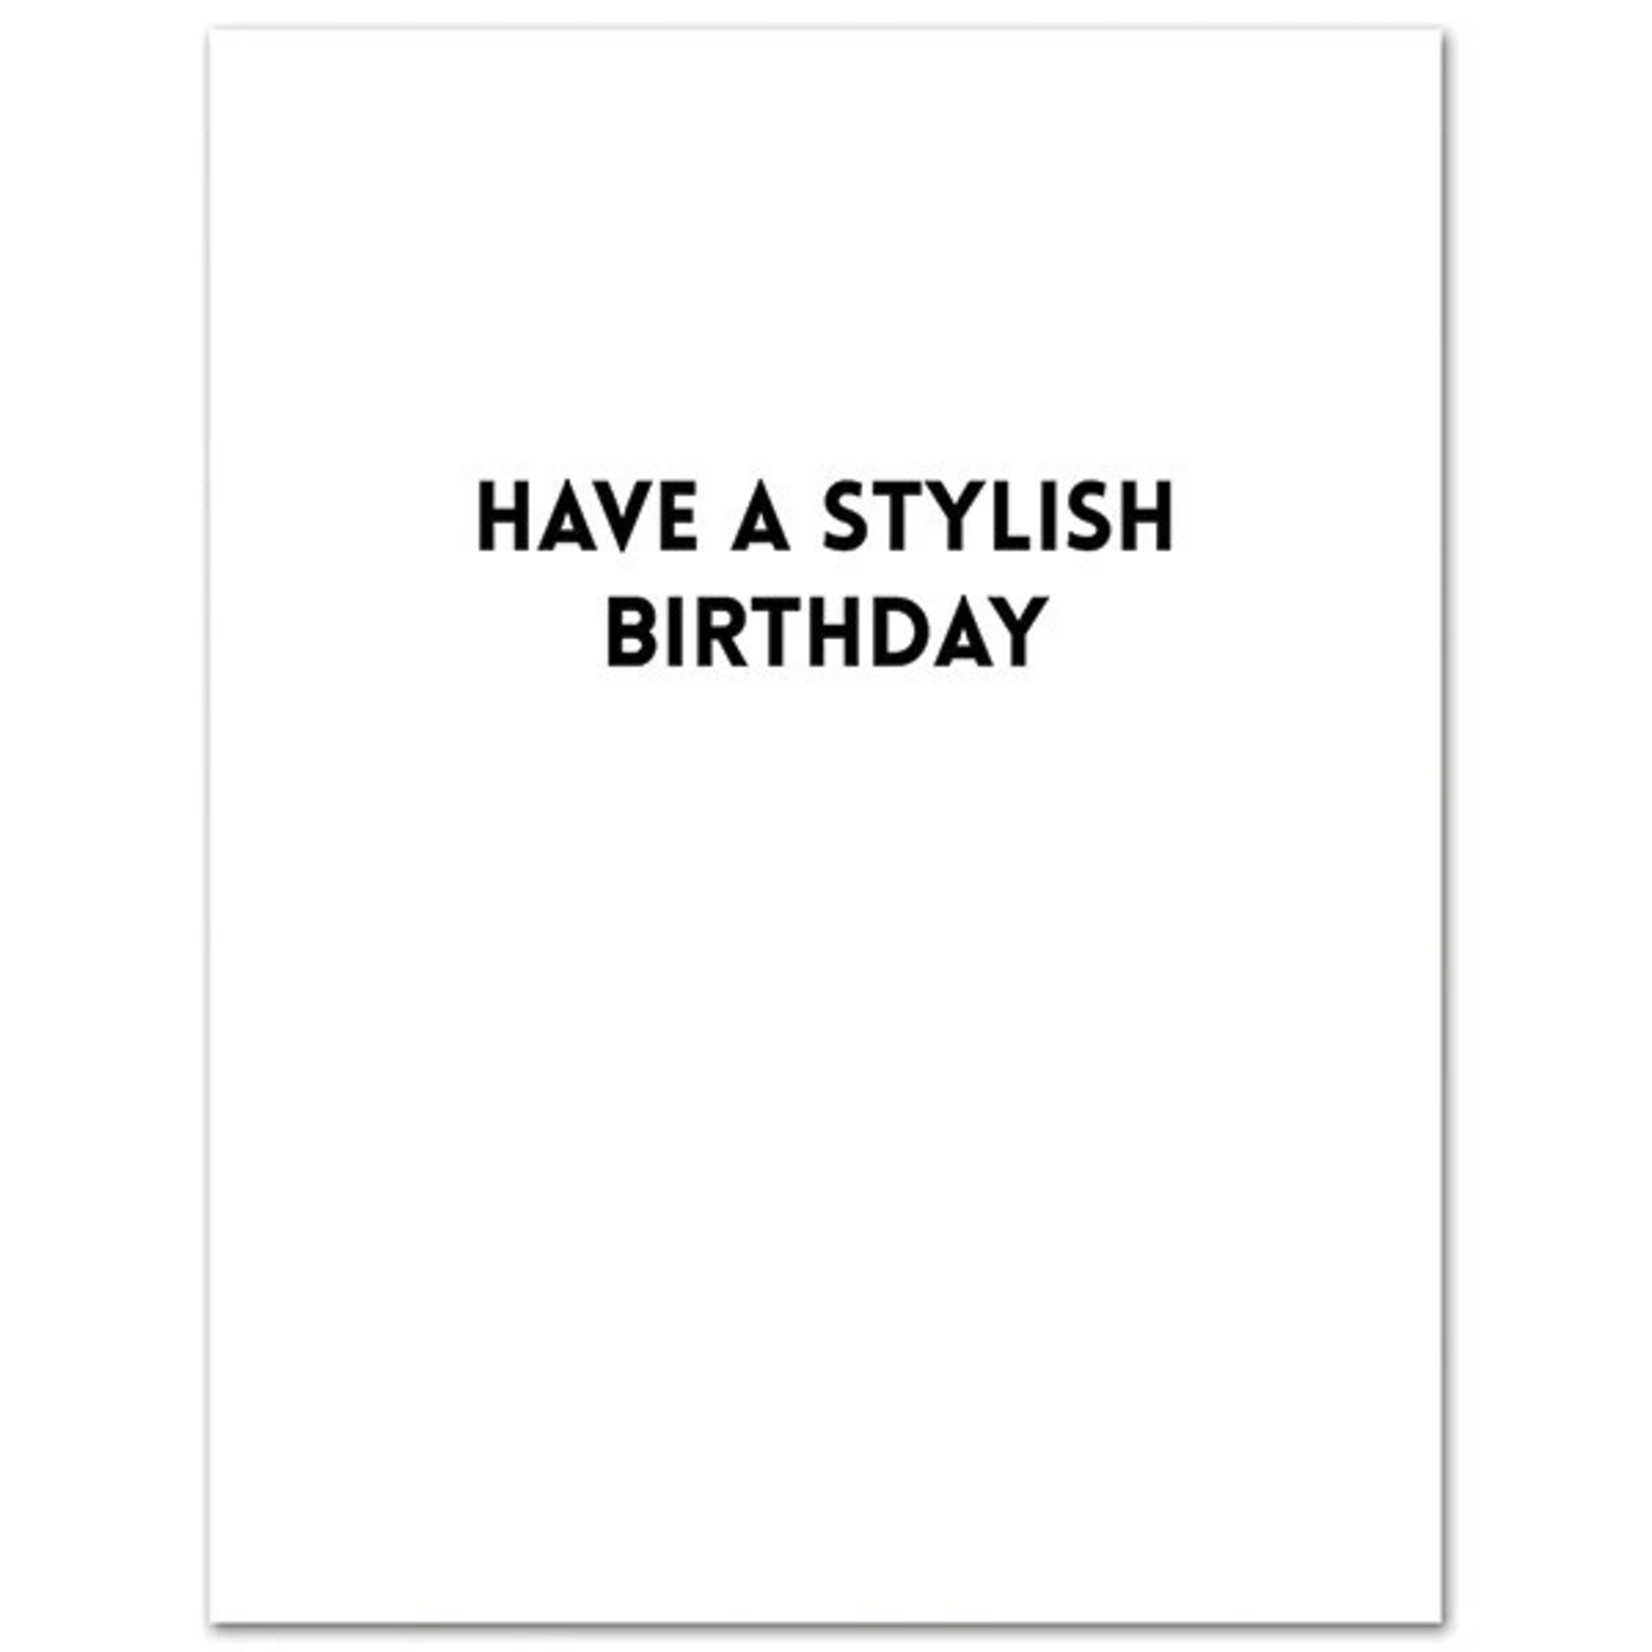 The Found Harry Stylish Birthday Card